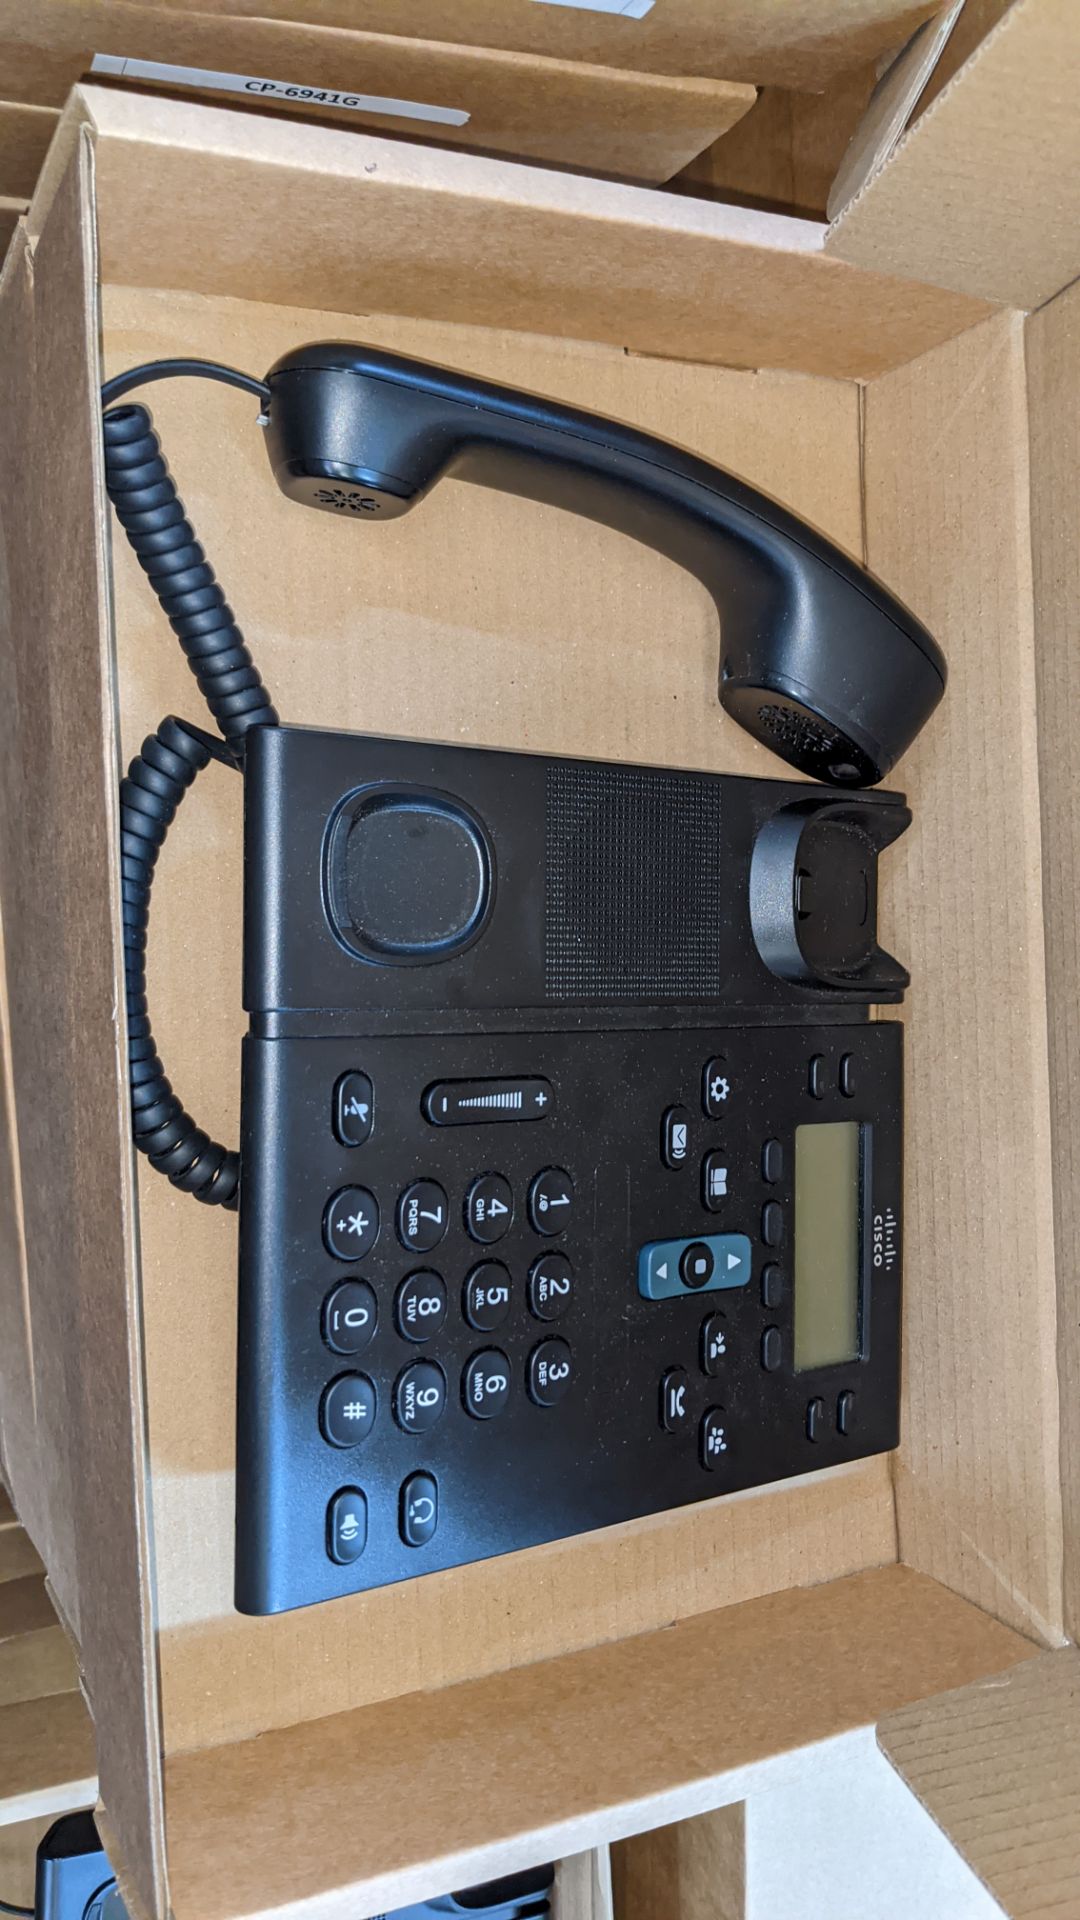 40 off Cisco telephone handsets model 6941 - Image 4 of 5